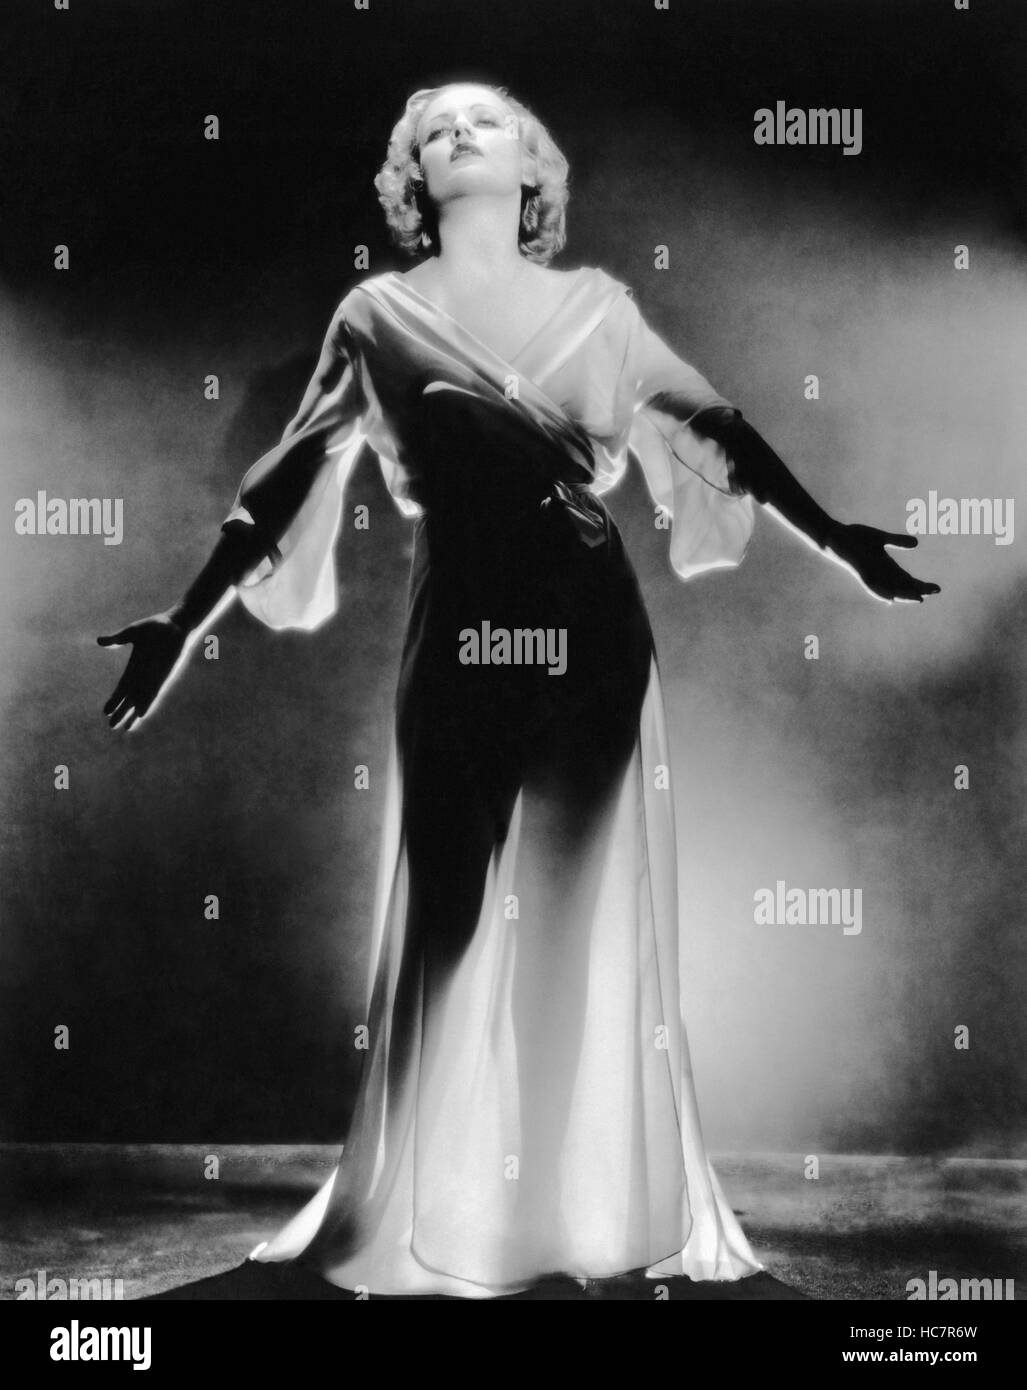 SUPERNATURAL, Carole Lombard, 1933 Stock Photo - Alamy